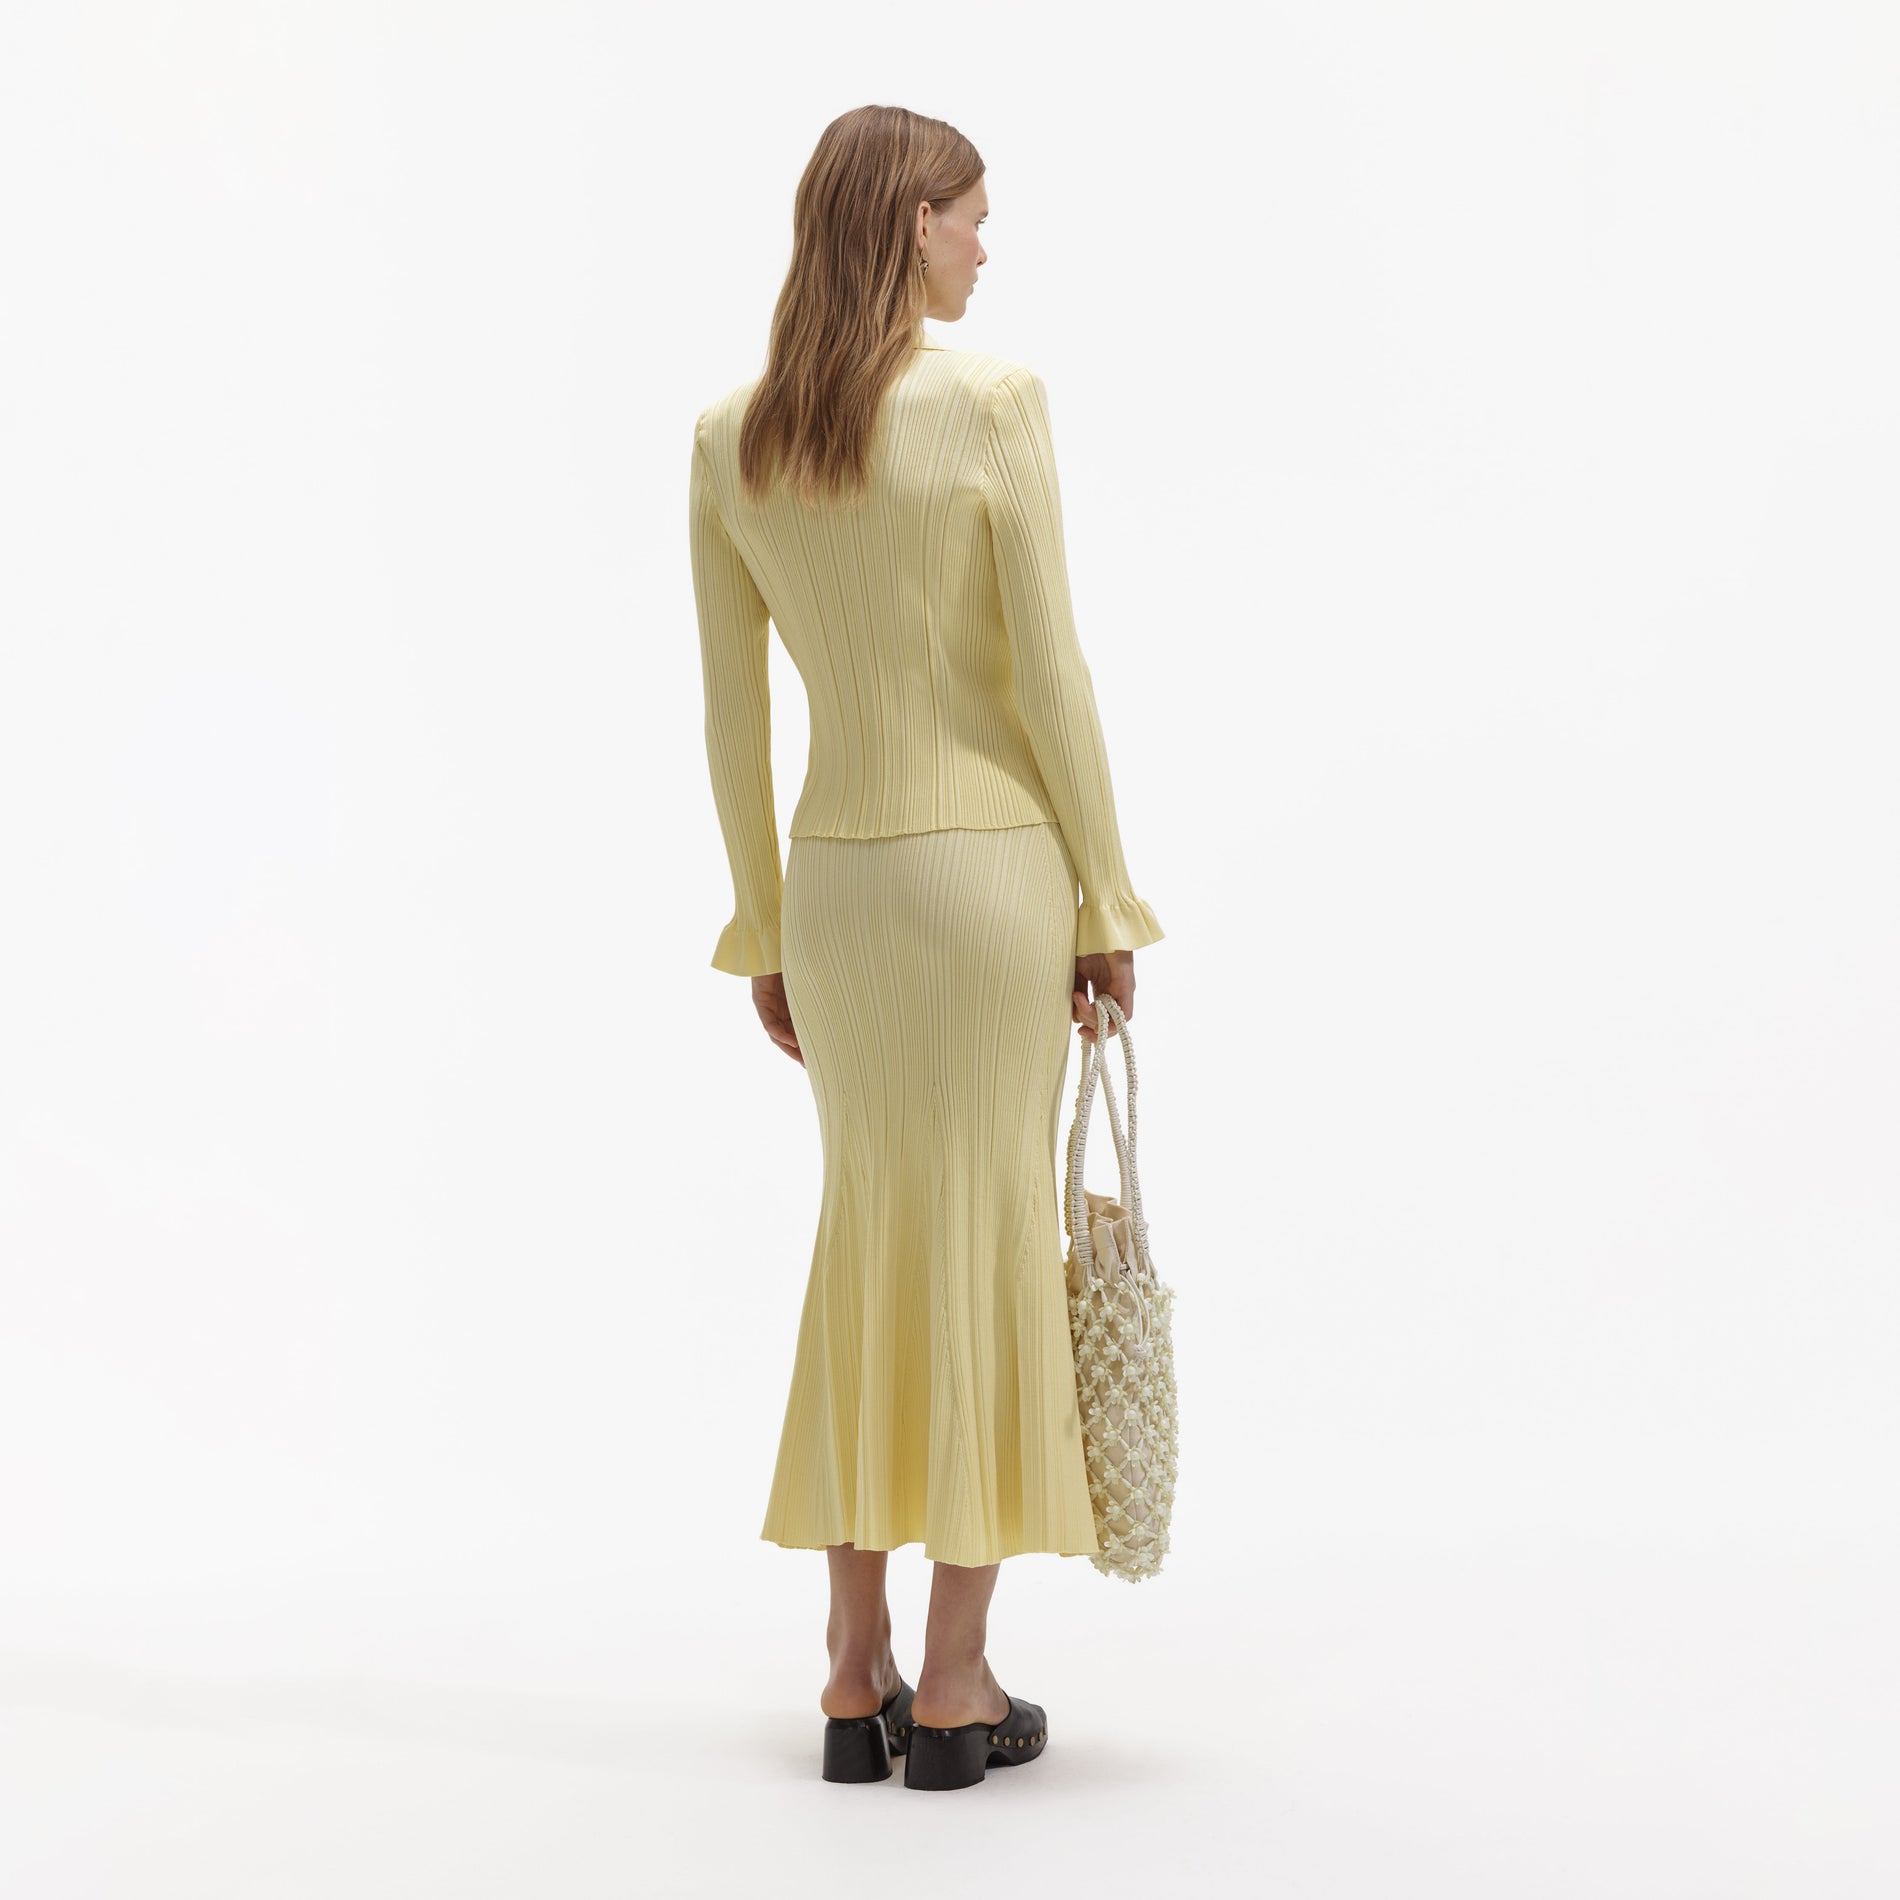 A Woman wearing the Yellow Ribbed Viscose Knit Skirt